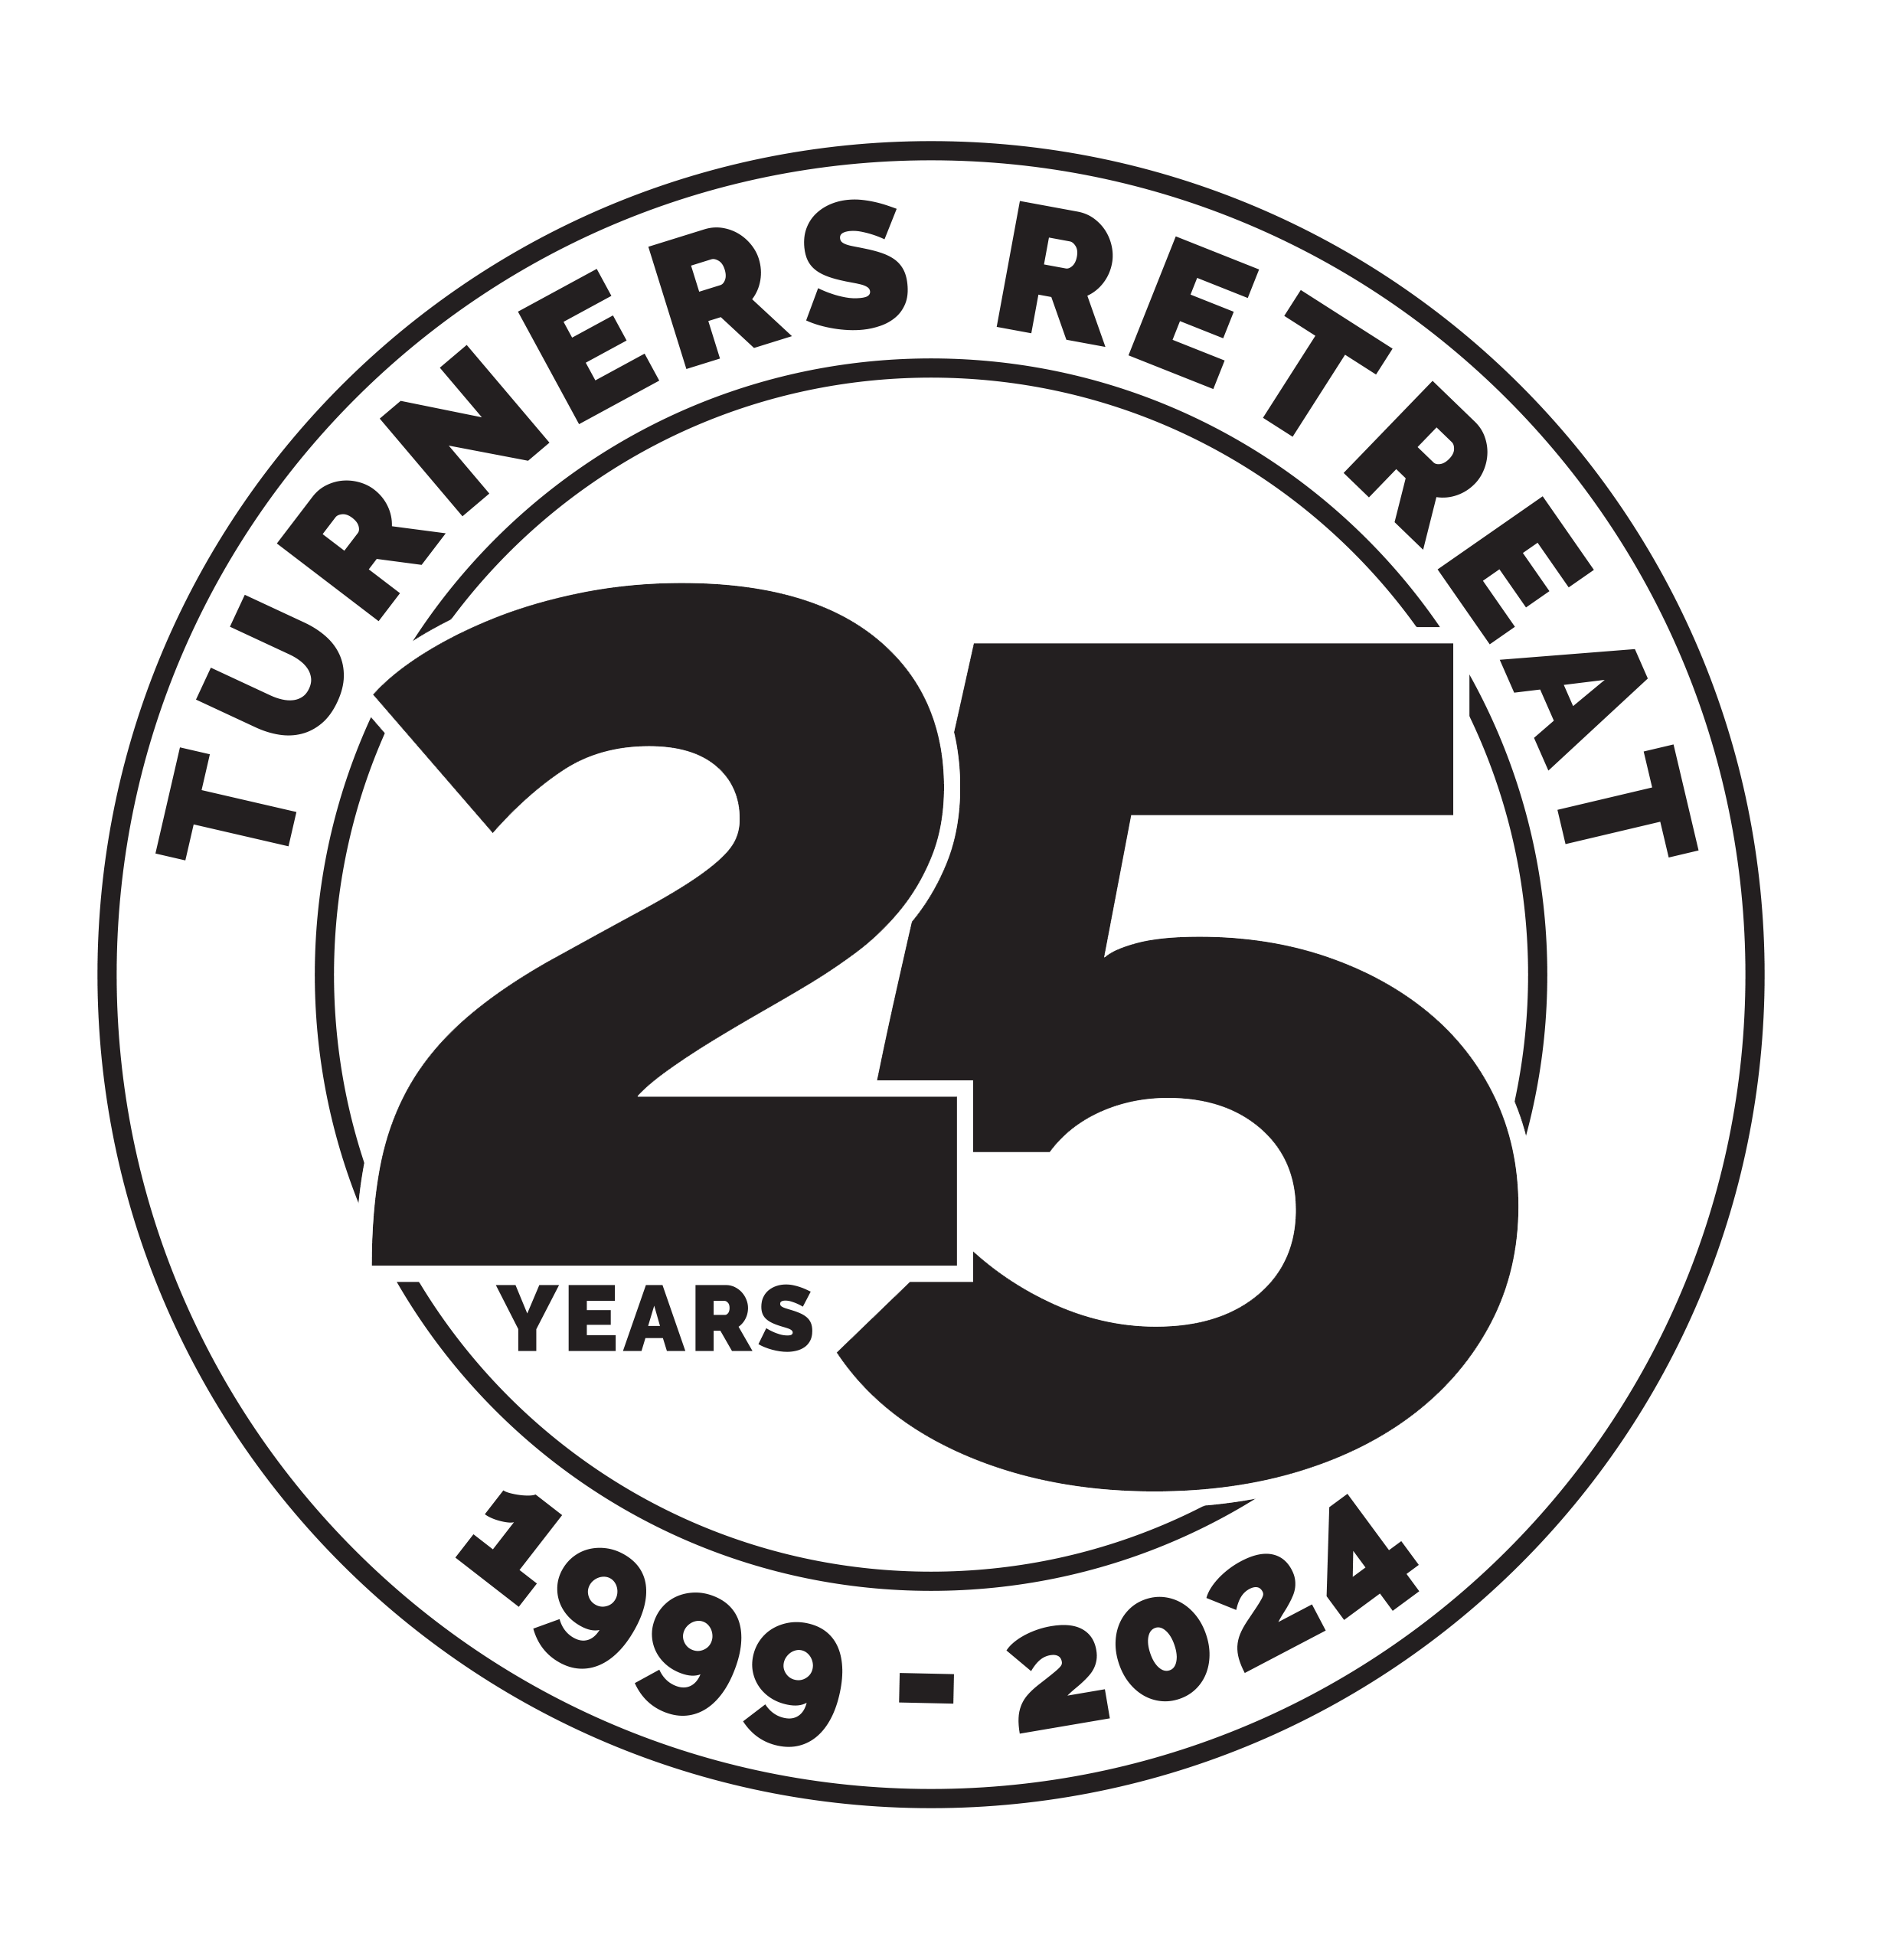 25 Year logo